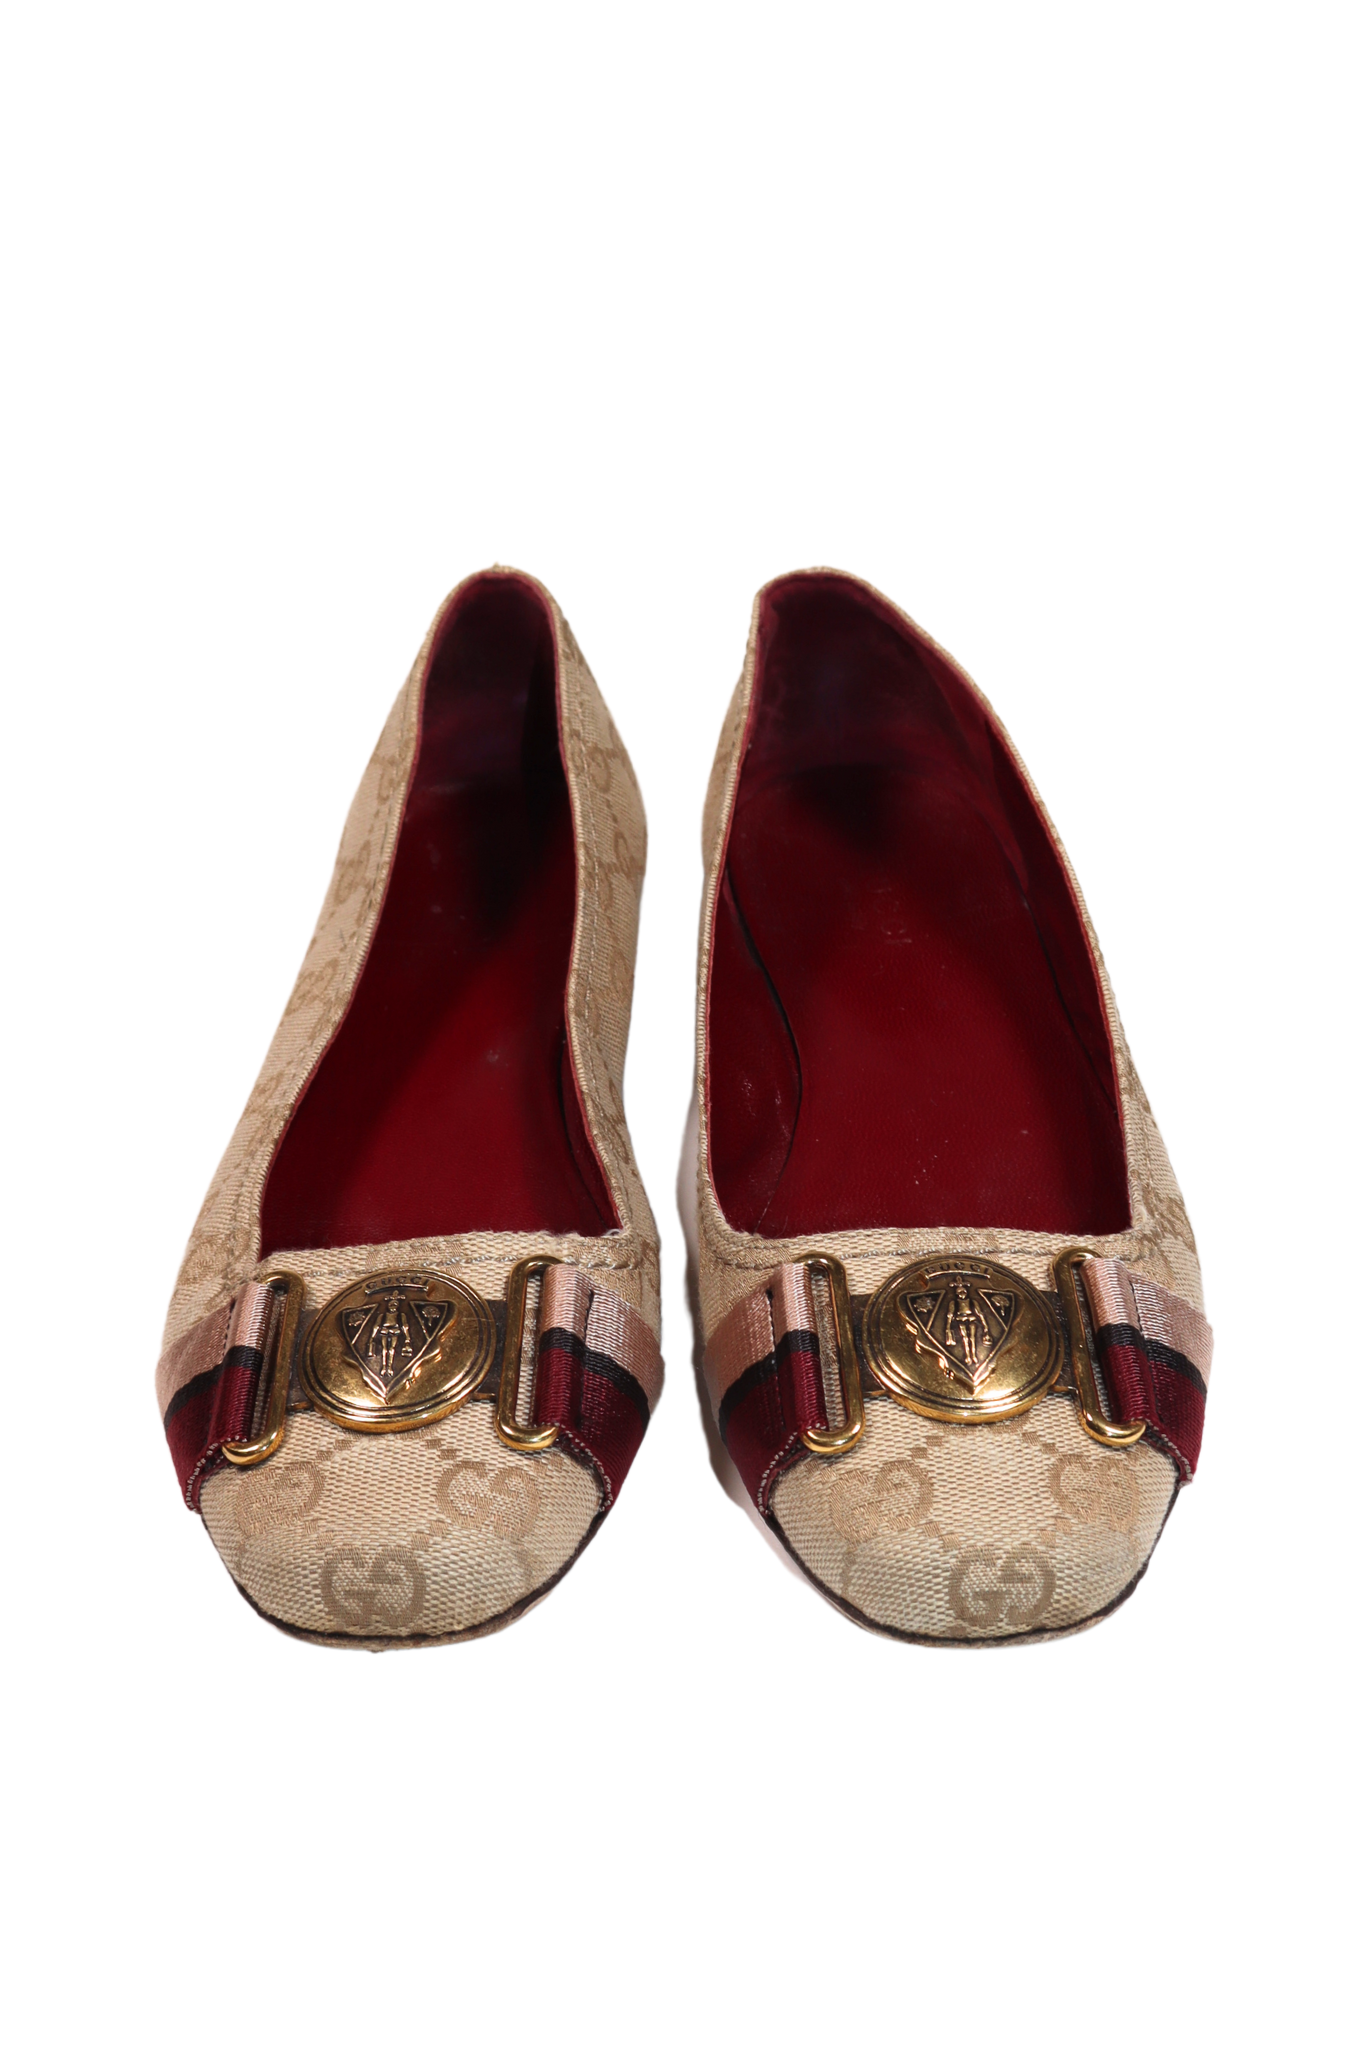 Vintage Gucci Monogram Ballet Flat Shoe